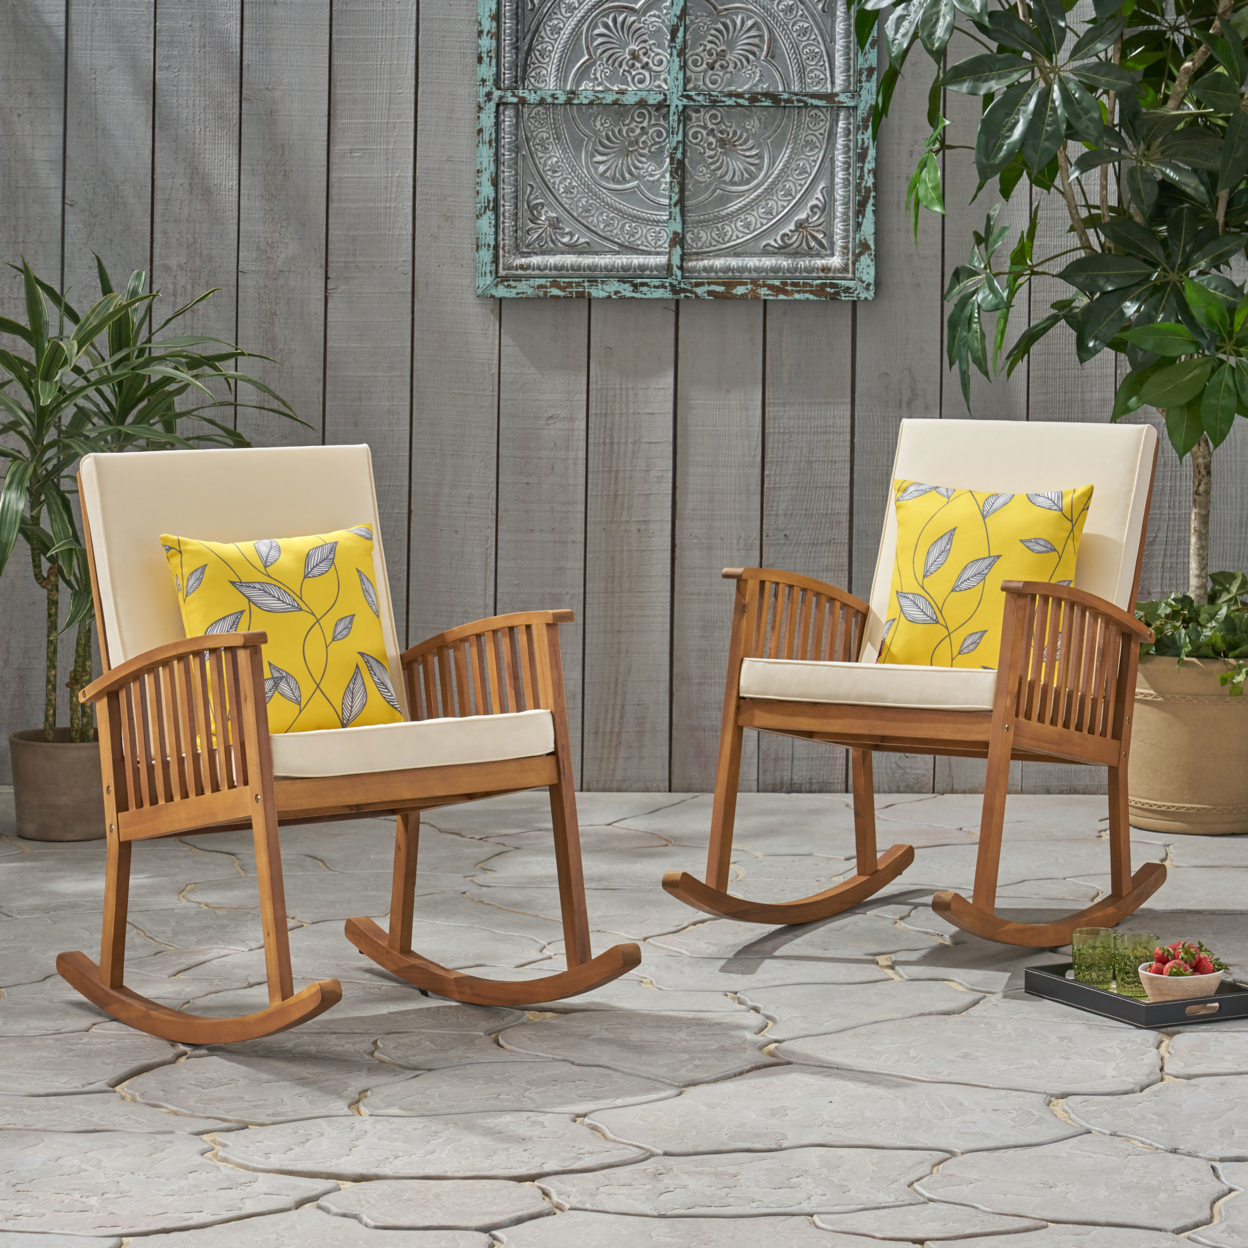 Audrey Outdoor Acacia Wood Rocking Chairs (Set Of 2) - Brown Patina Finish, Cream